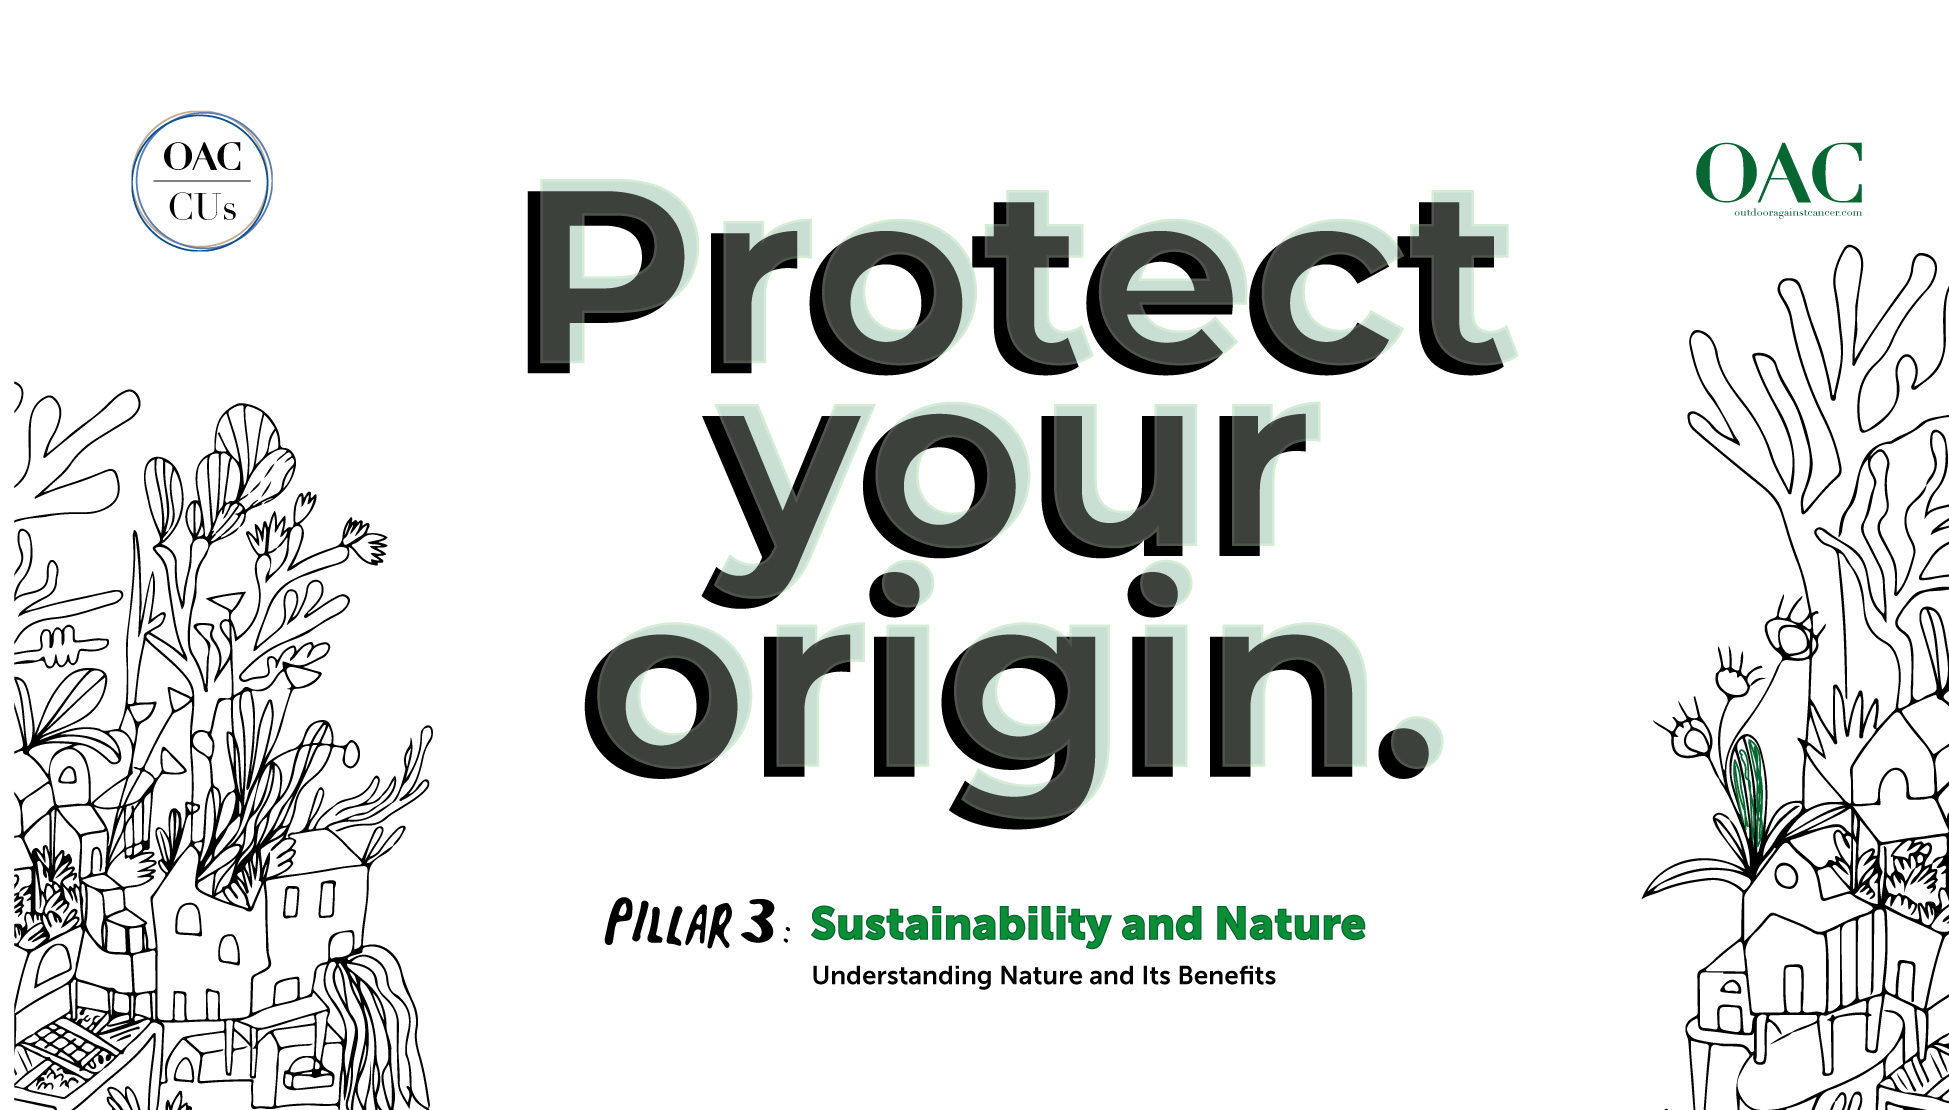 OACCUS Posters: Pillar III Sustainability & Nature